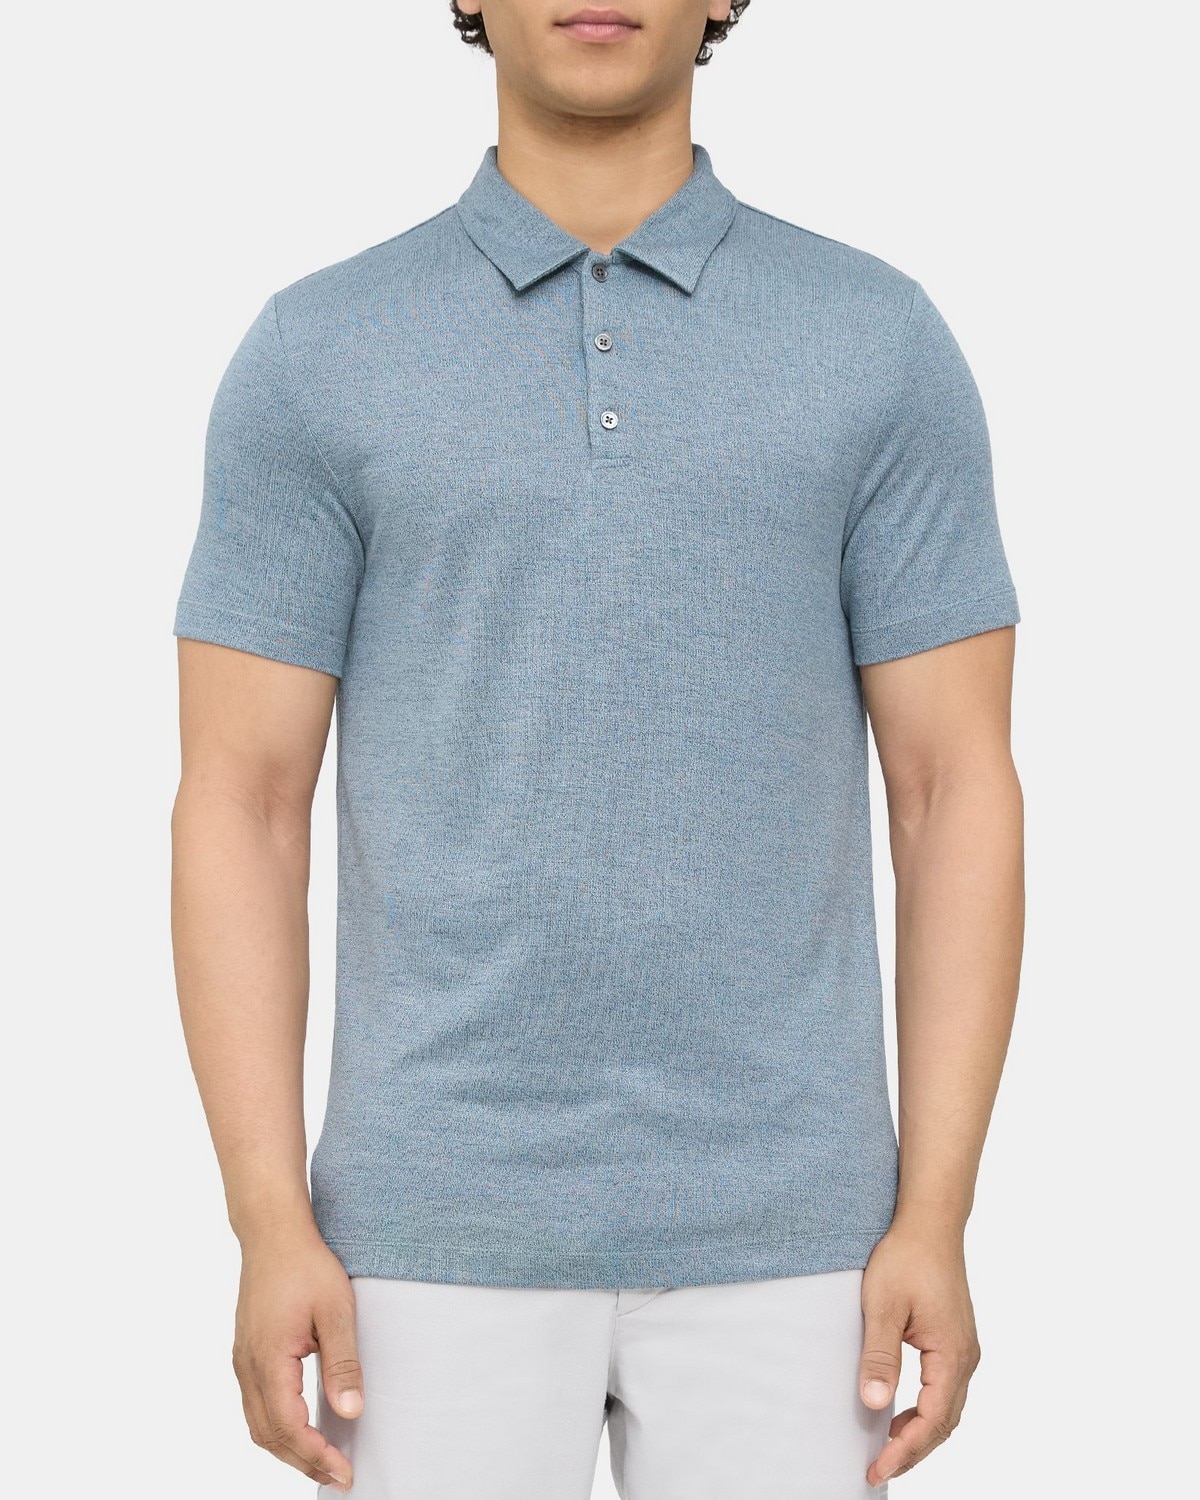 Polo Shirt in Modal Blend Jersey